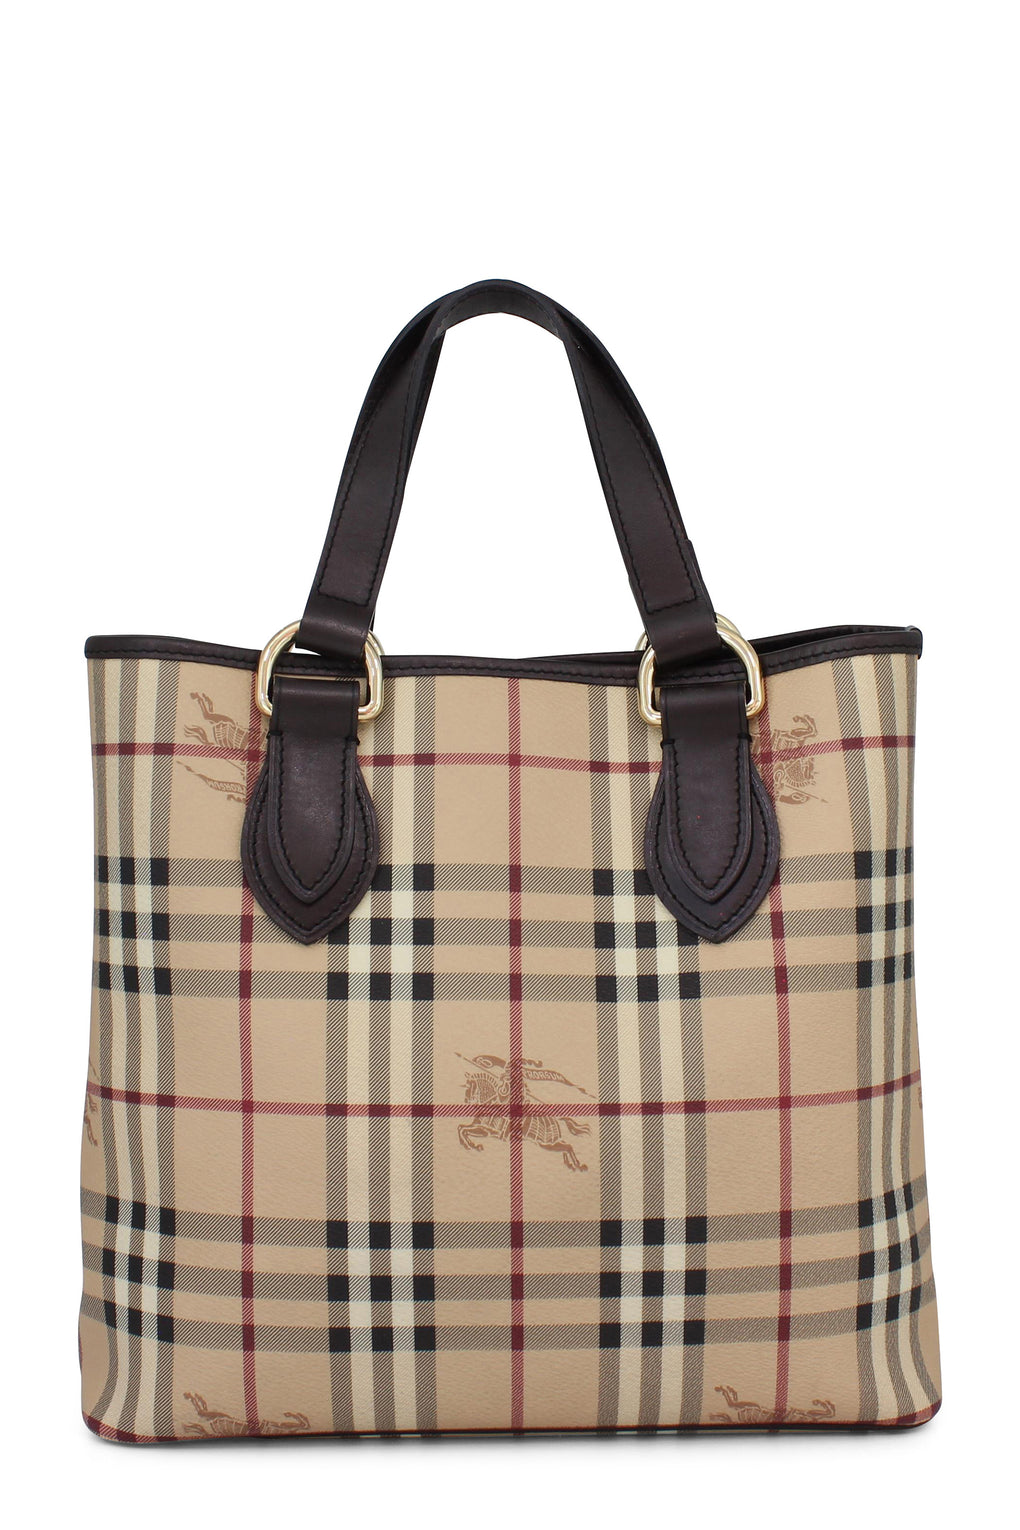 burberry haymarket handbag